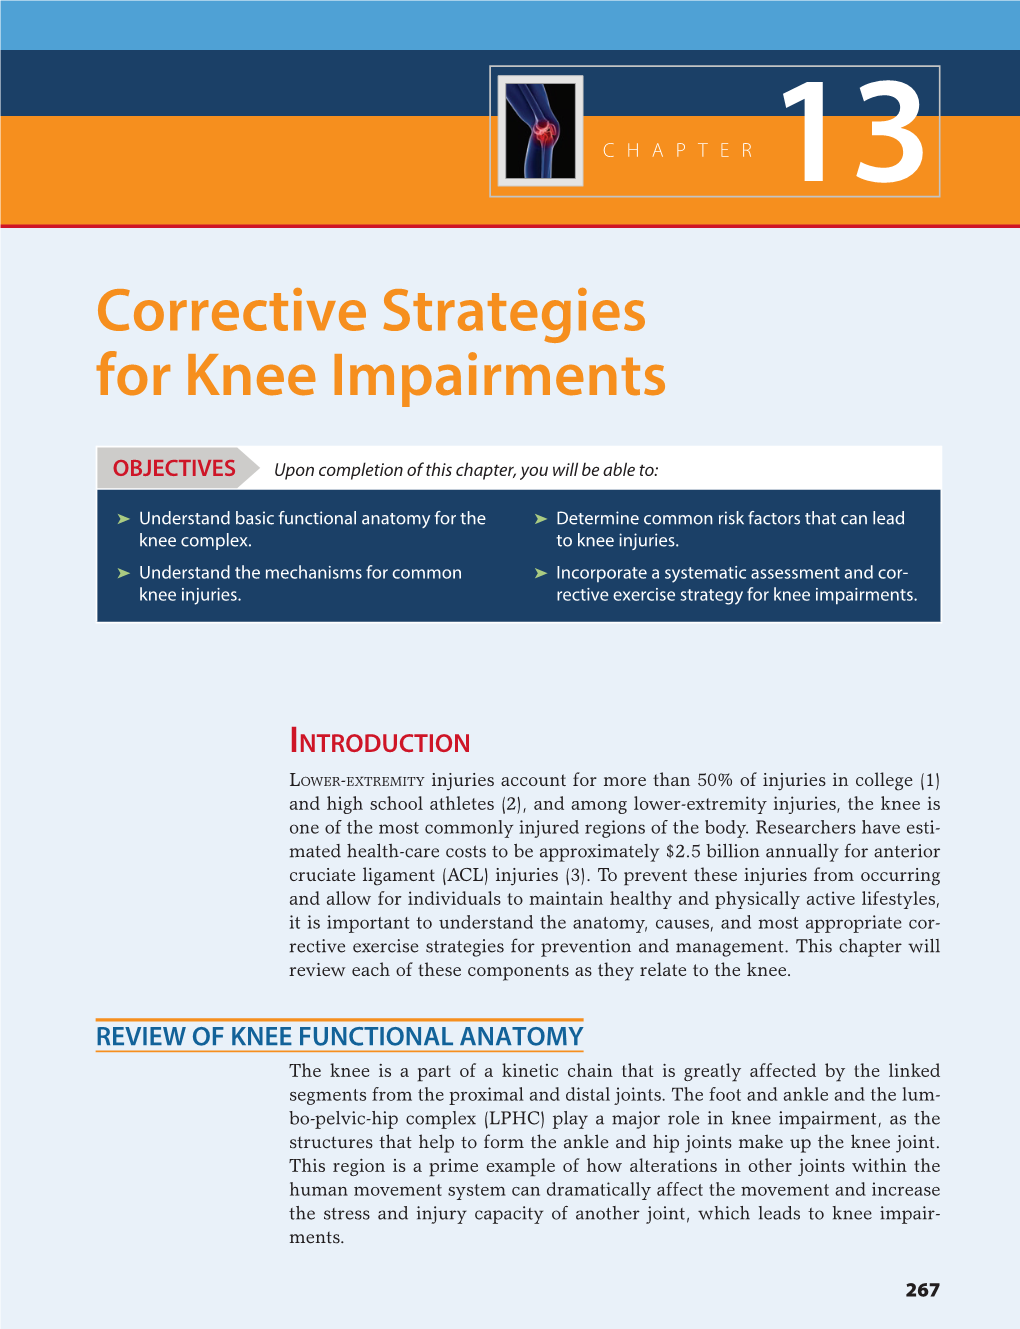 Corrective Strategies for Knee Impairments